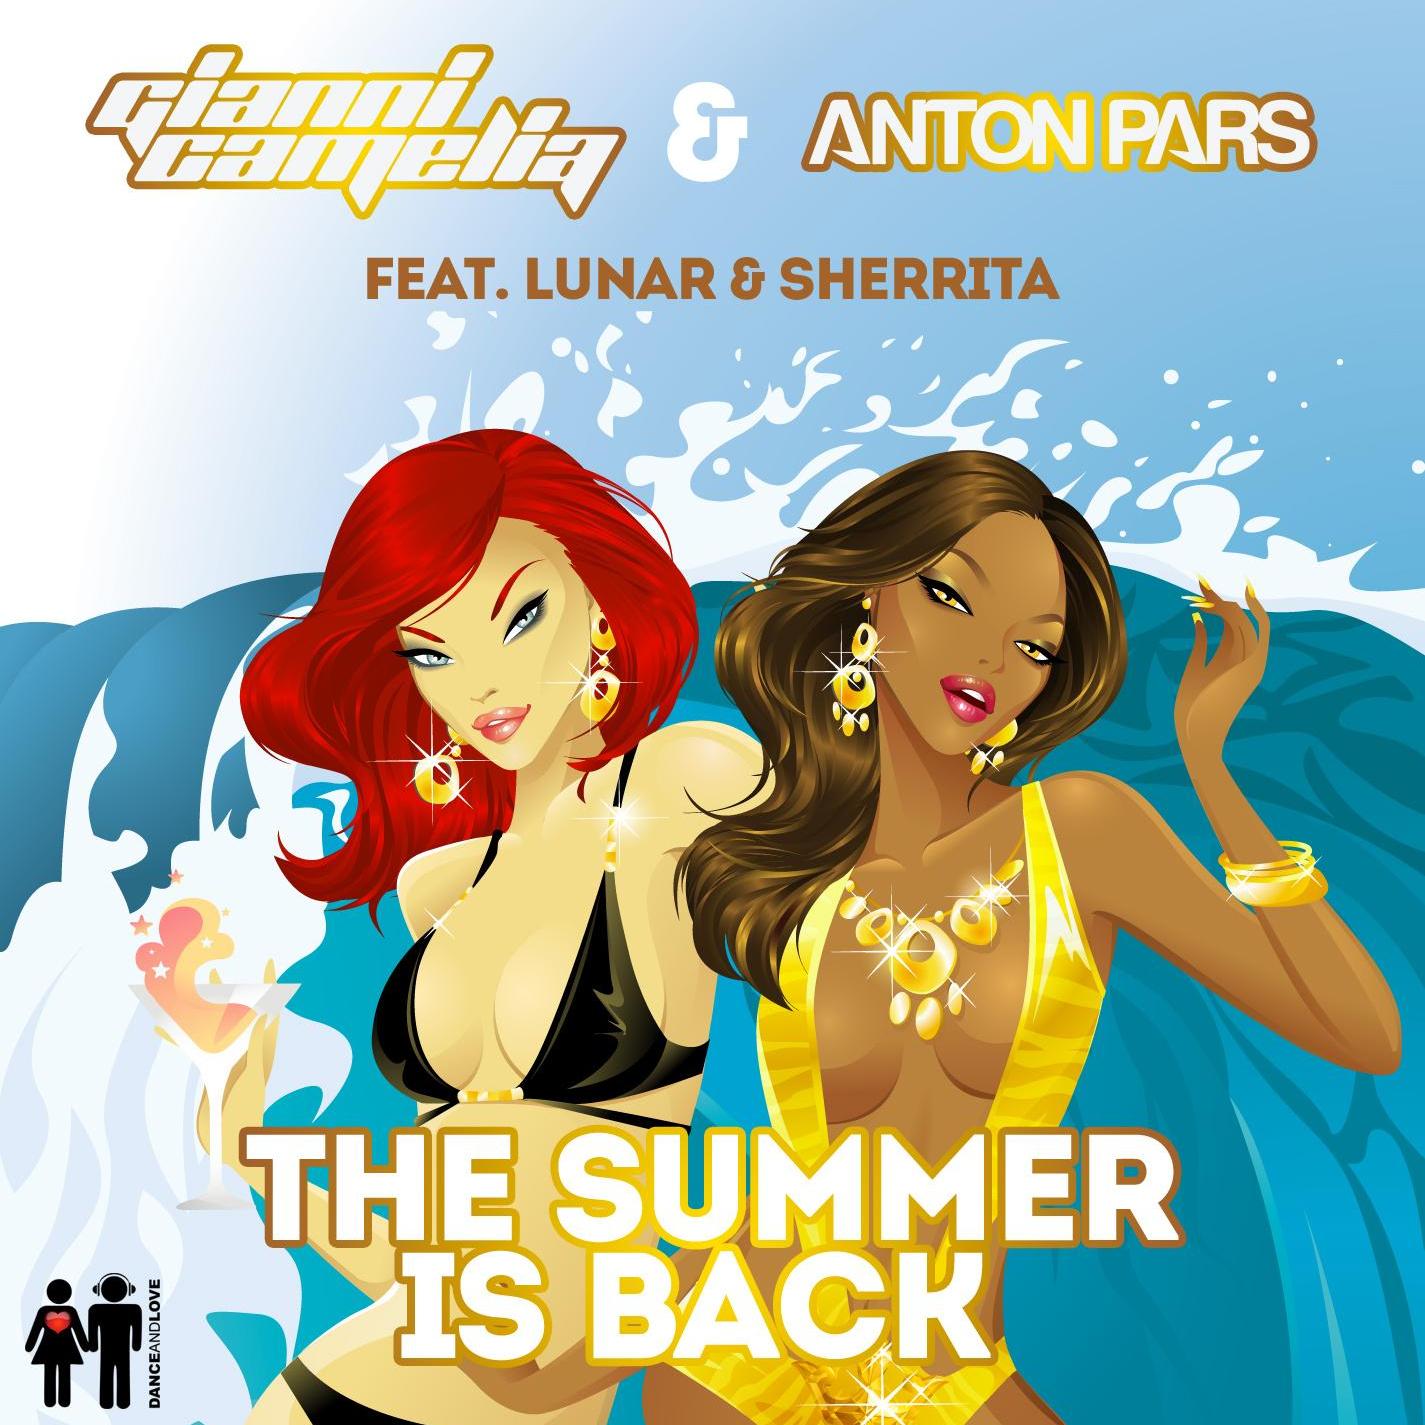 Gianni Camelia & Anton Pars Feat, Lunar & Sherrita - The Summer Is Back (Stefano Pain Remix Radio Edit)